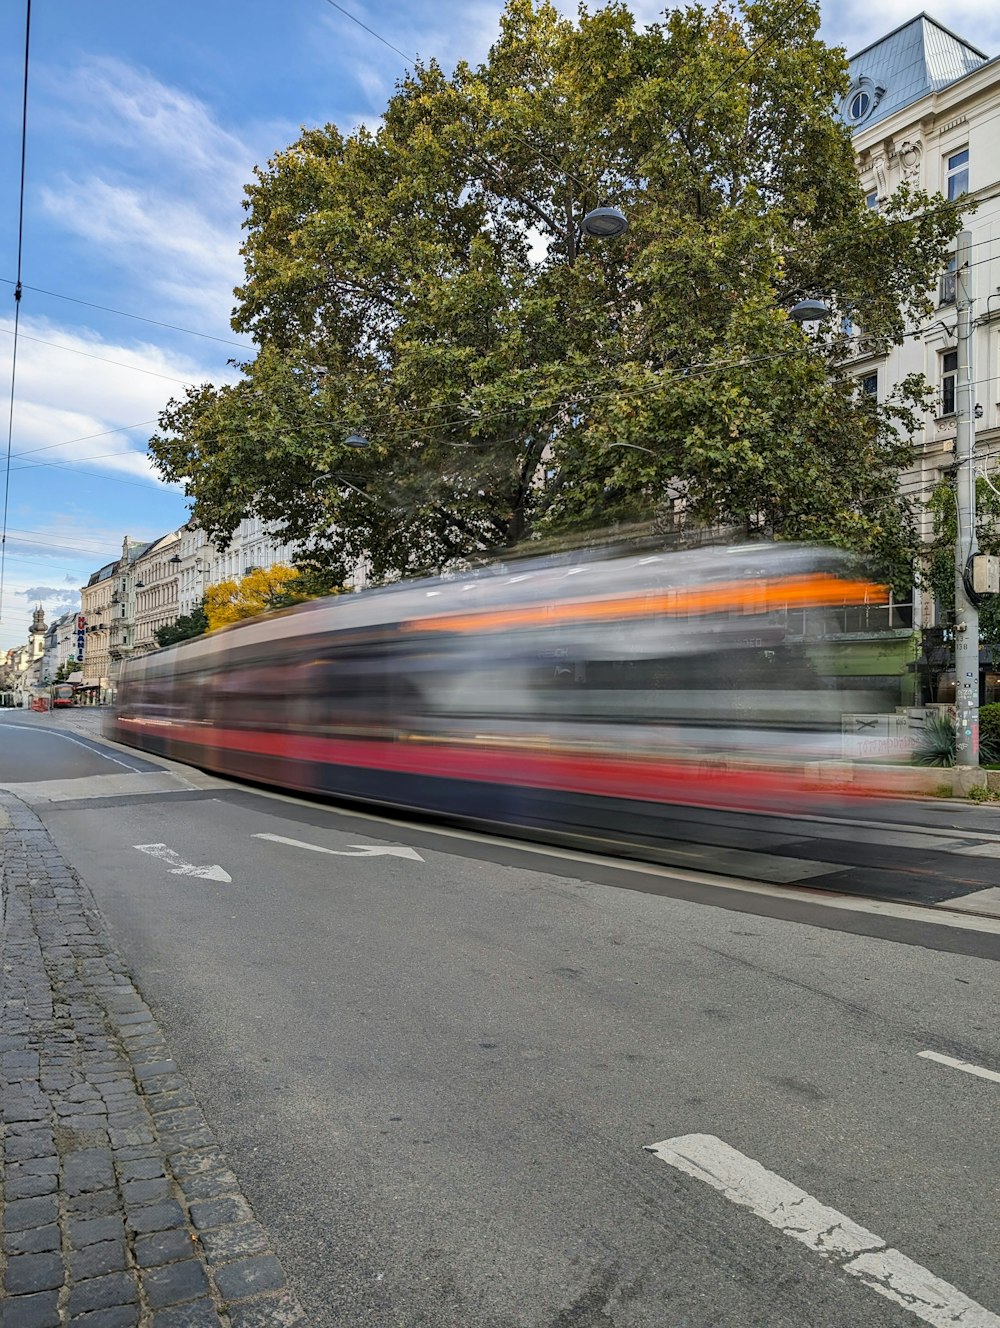 a blurry photo of a train on a street